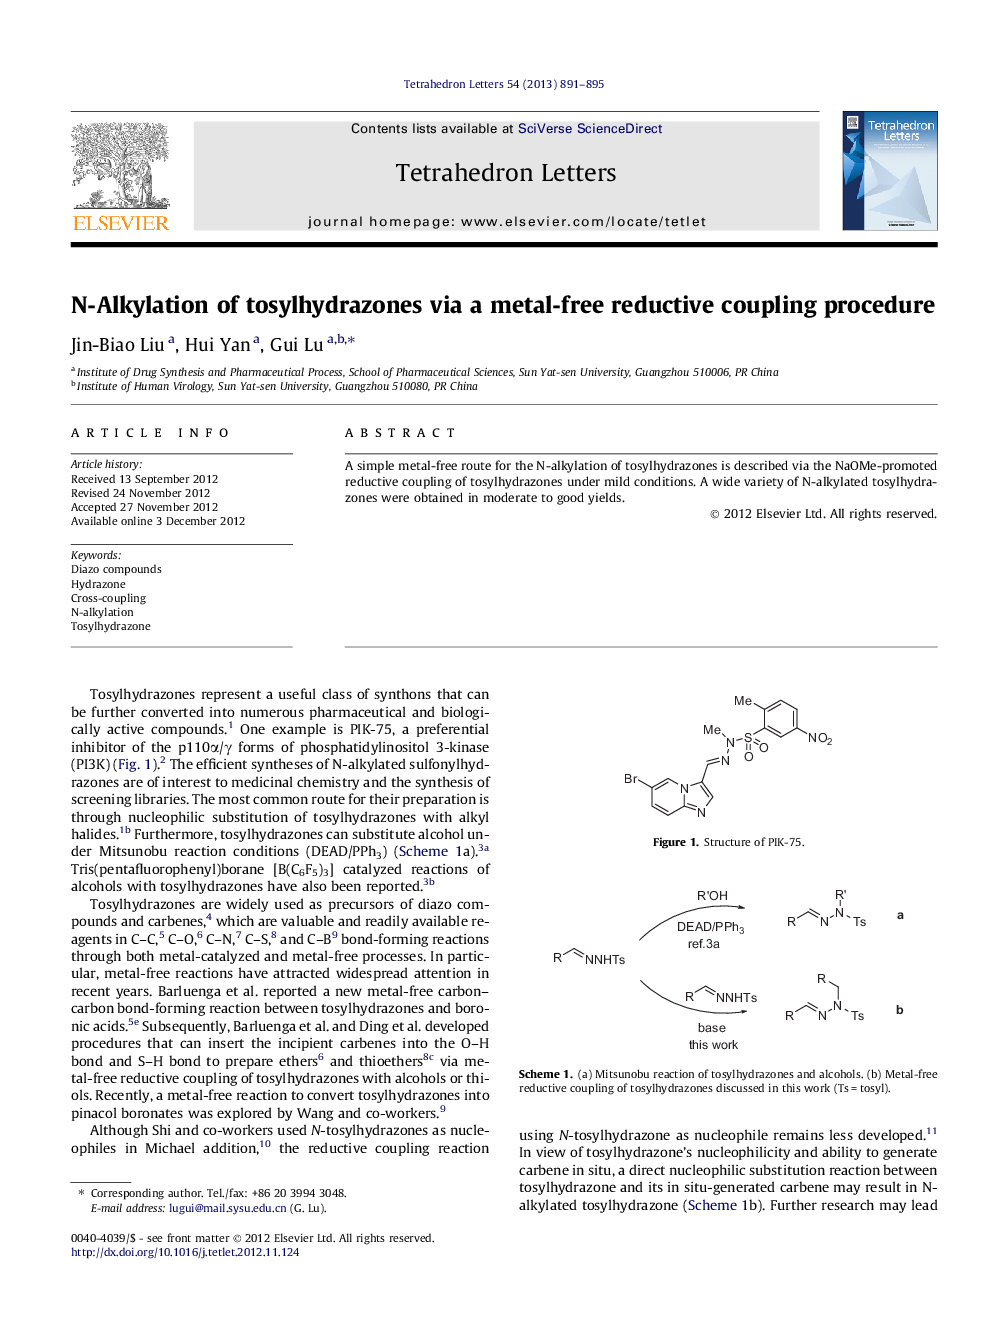 N-Alkylation of tosylhydrazones via a metal-free reductive coupling procedure